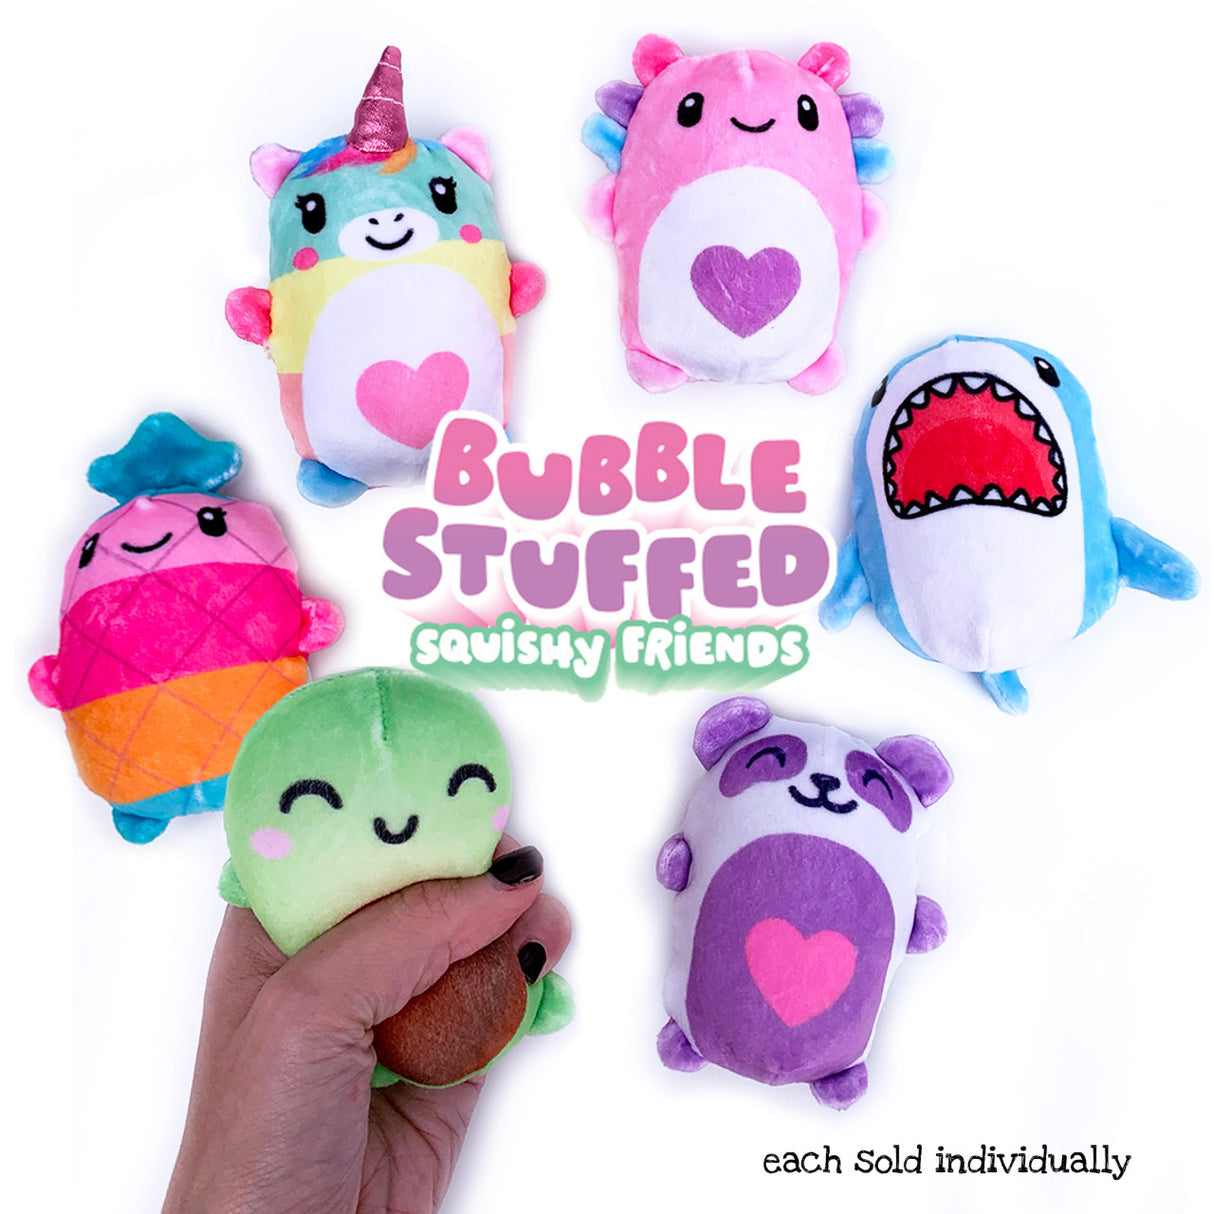 Bubble Stuffed Squishy Friend